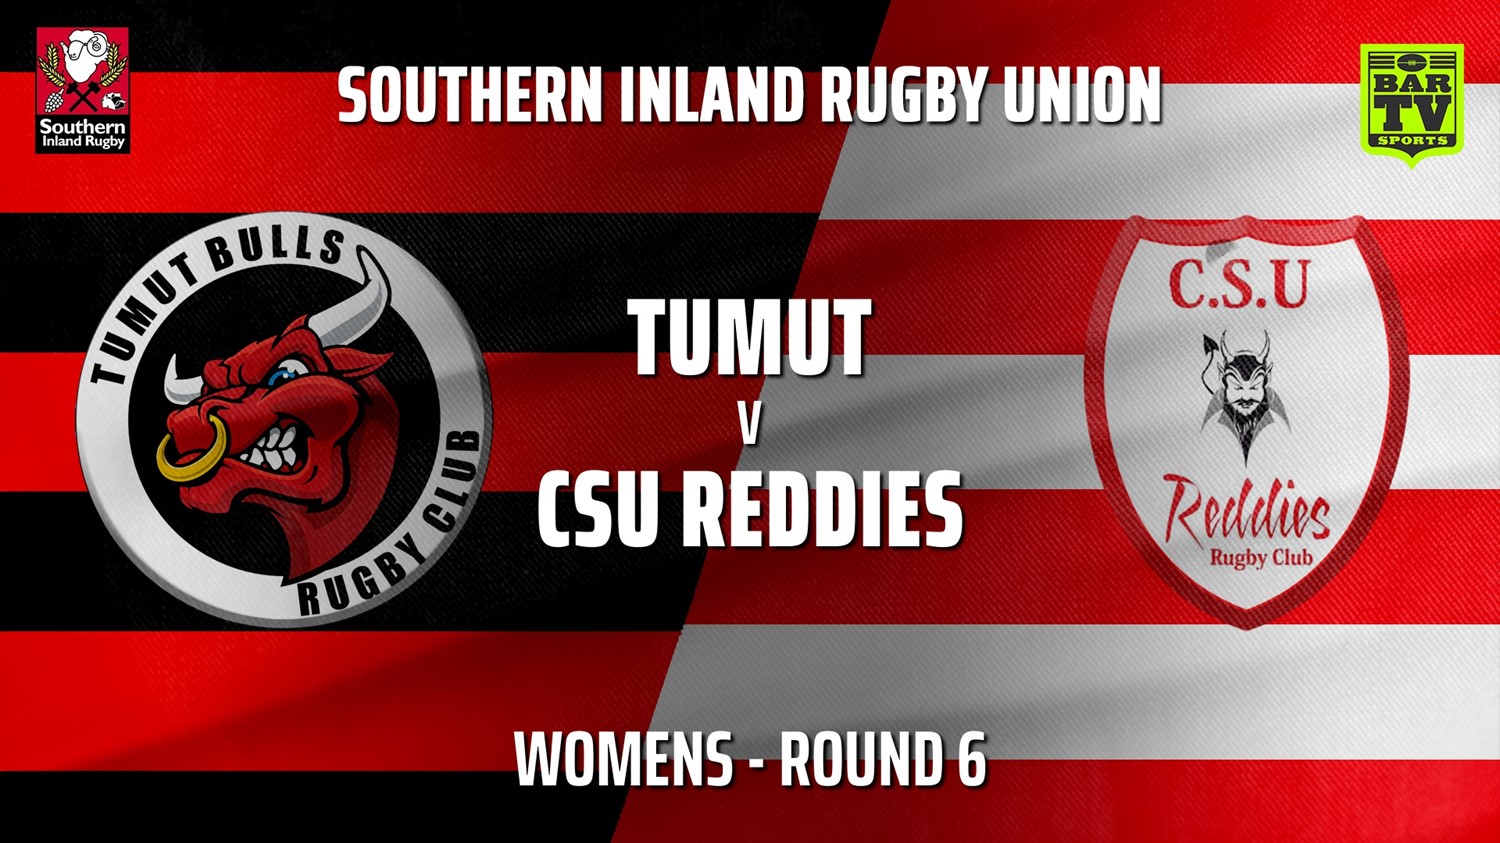 210515-Southern Inland Rugby Union Round 6 - Womens - Tumut Bulls v CSU Reddies Slate Image